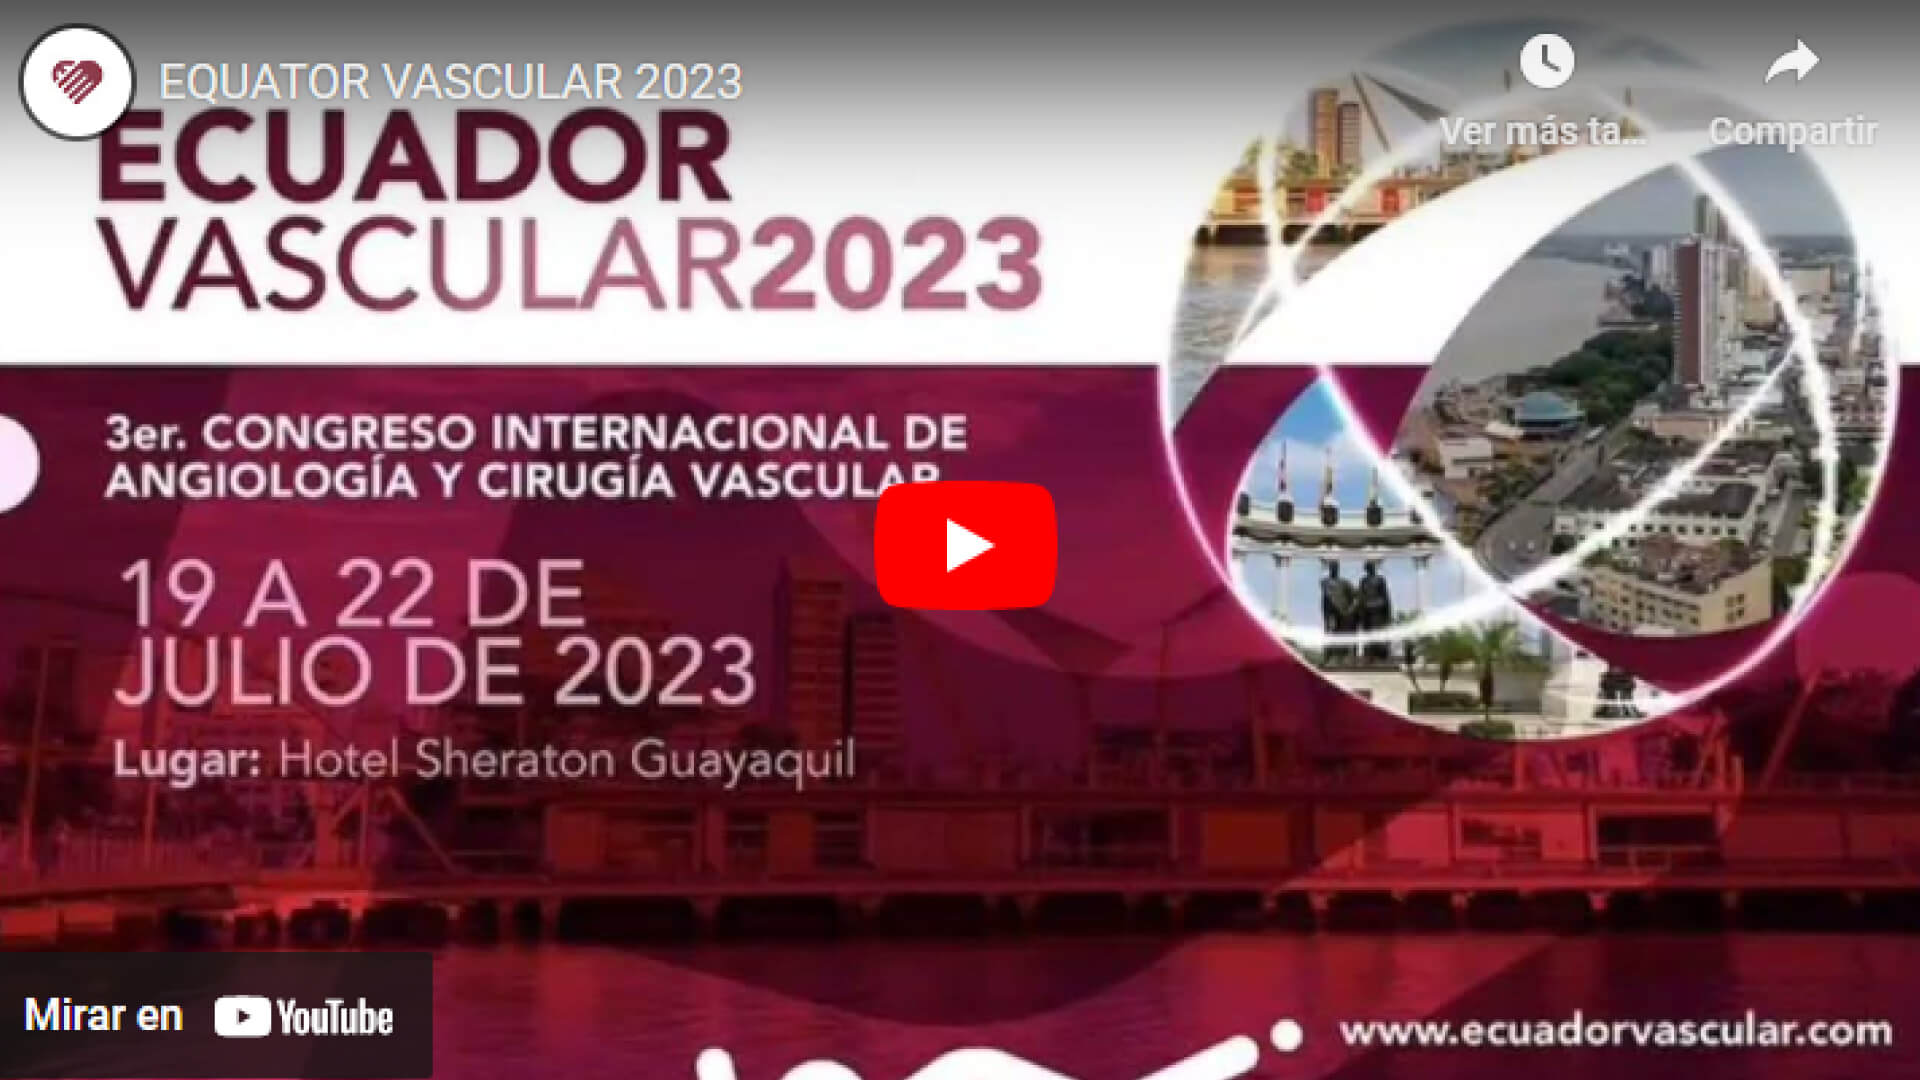 Equator Vascular 2023